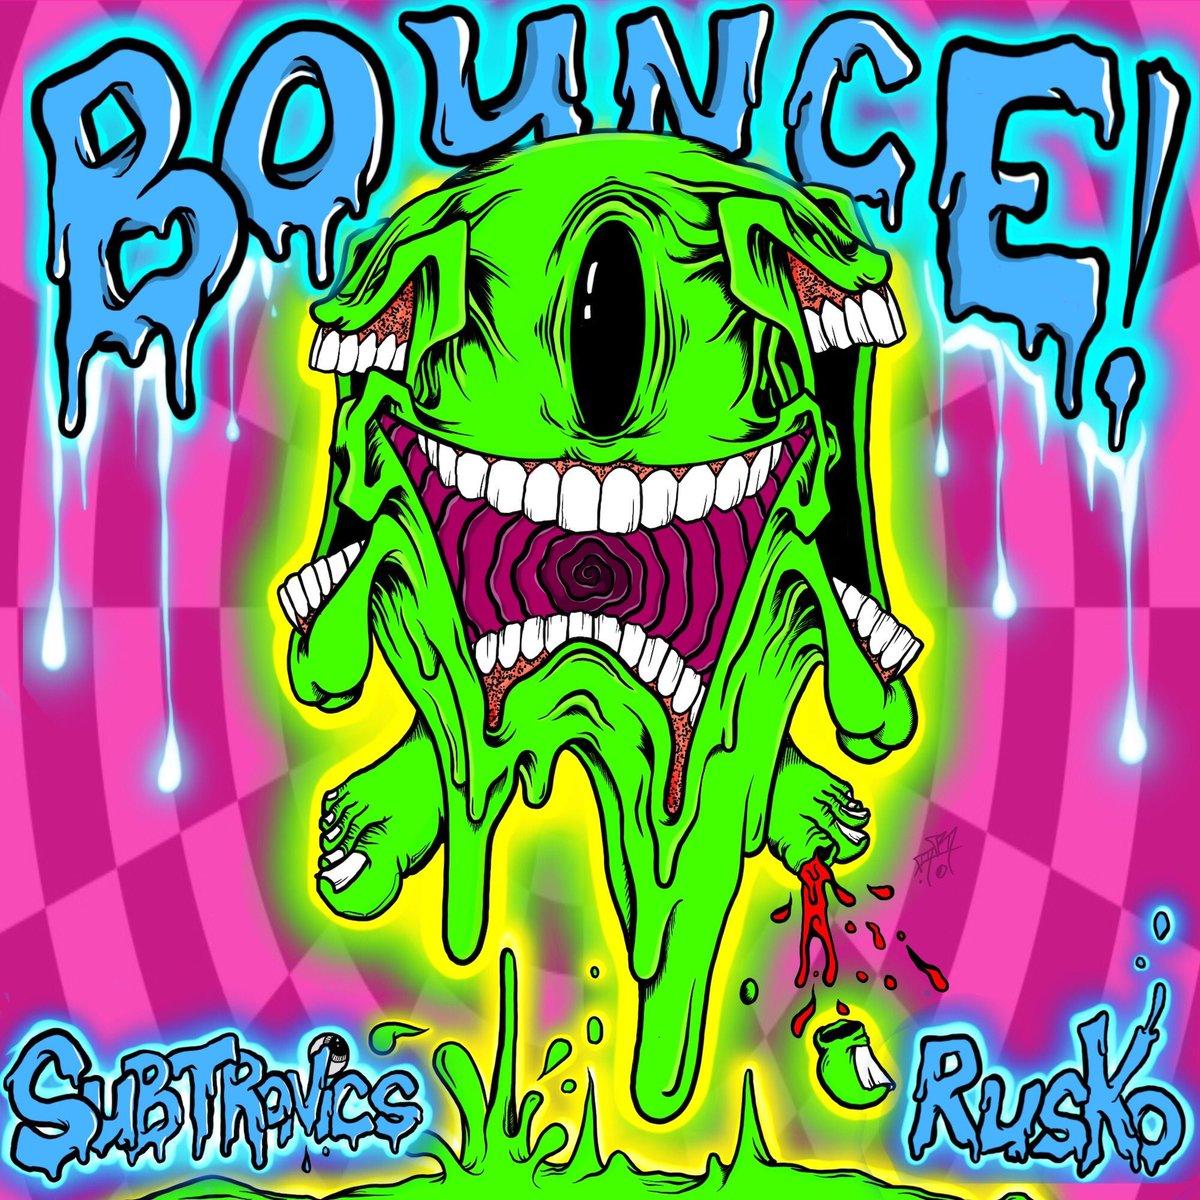 Rusko & Subtronics Bounce is a Huge Collaborative Single